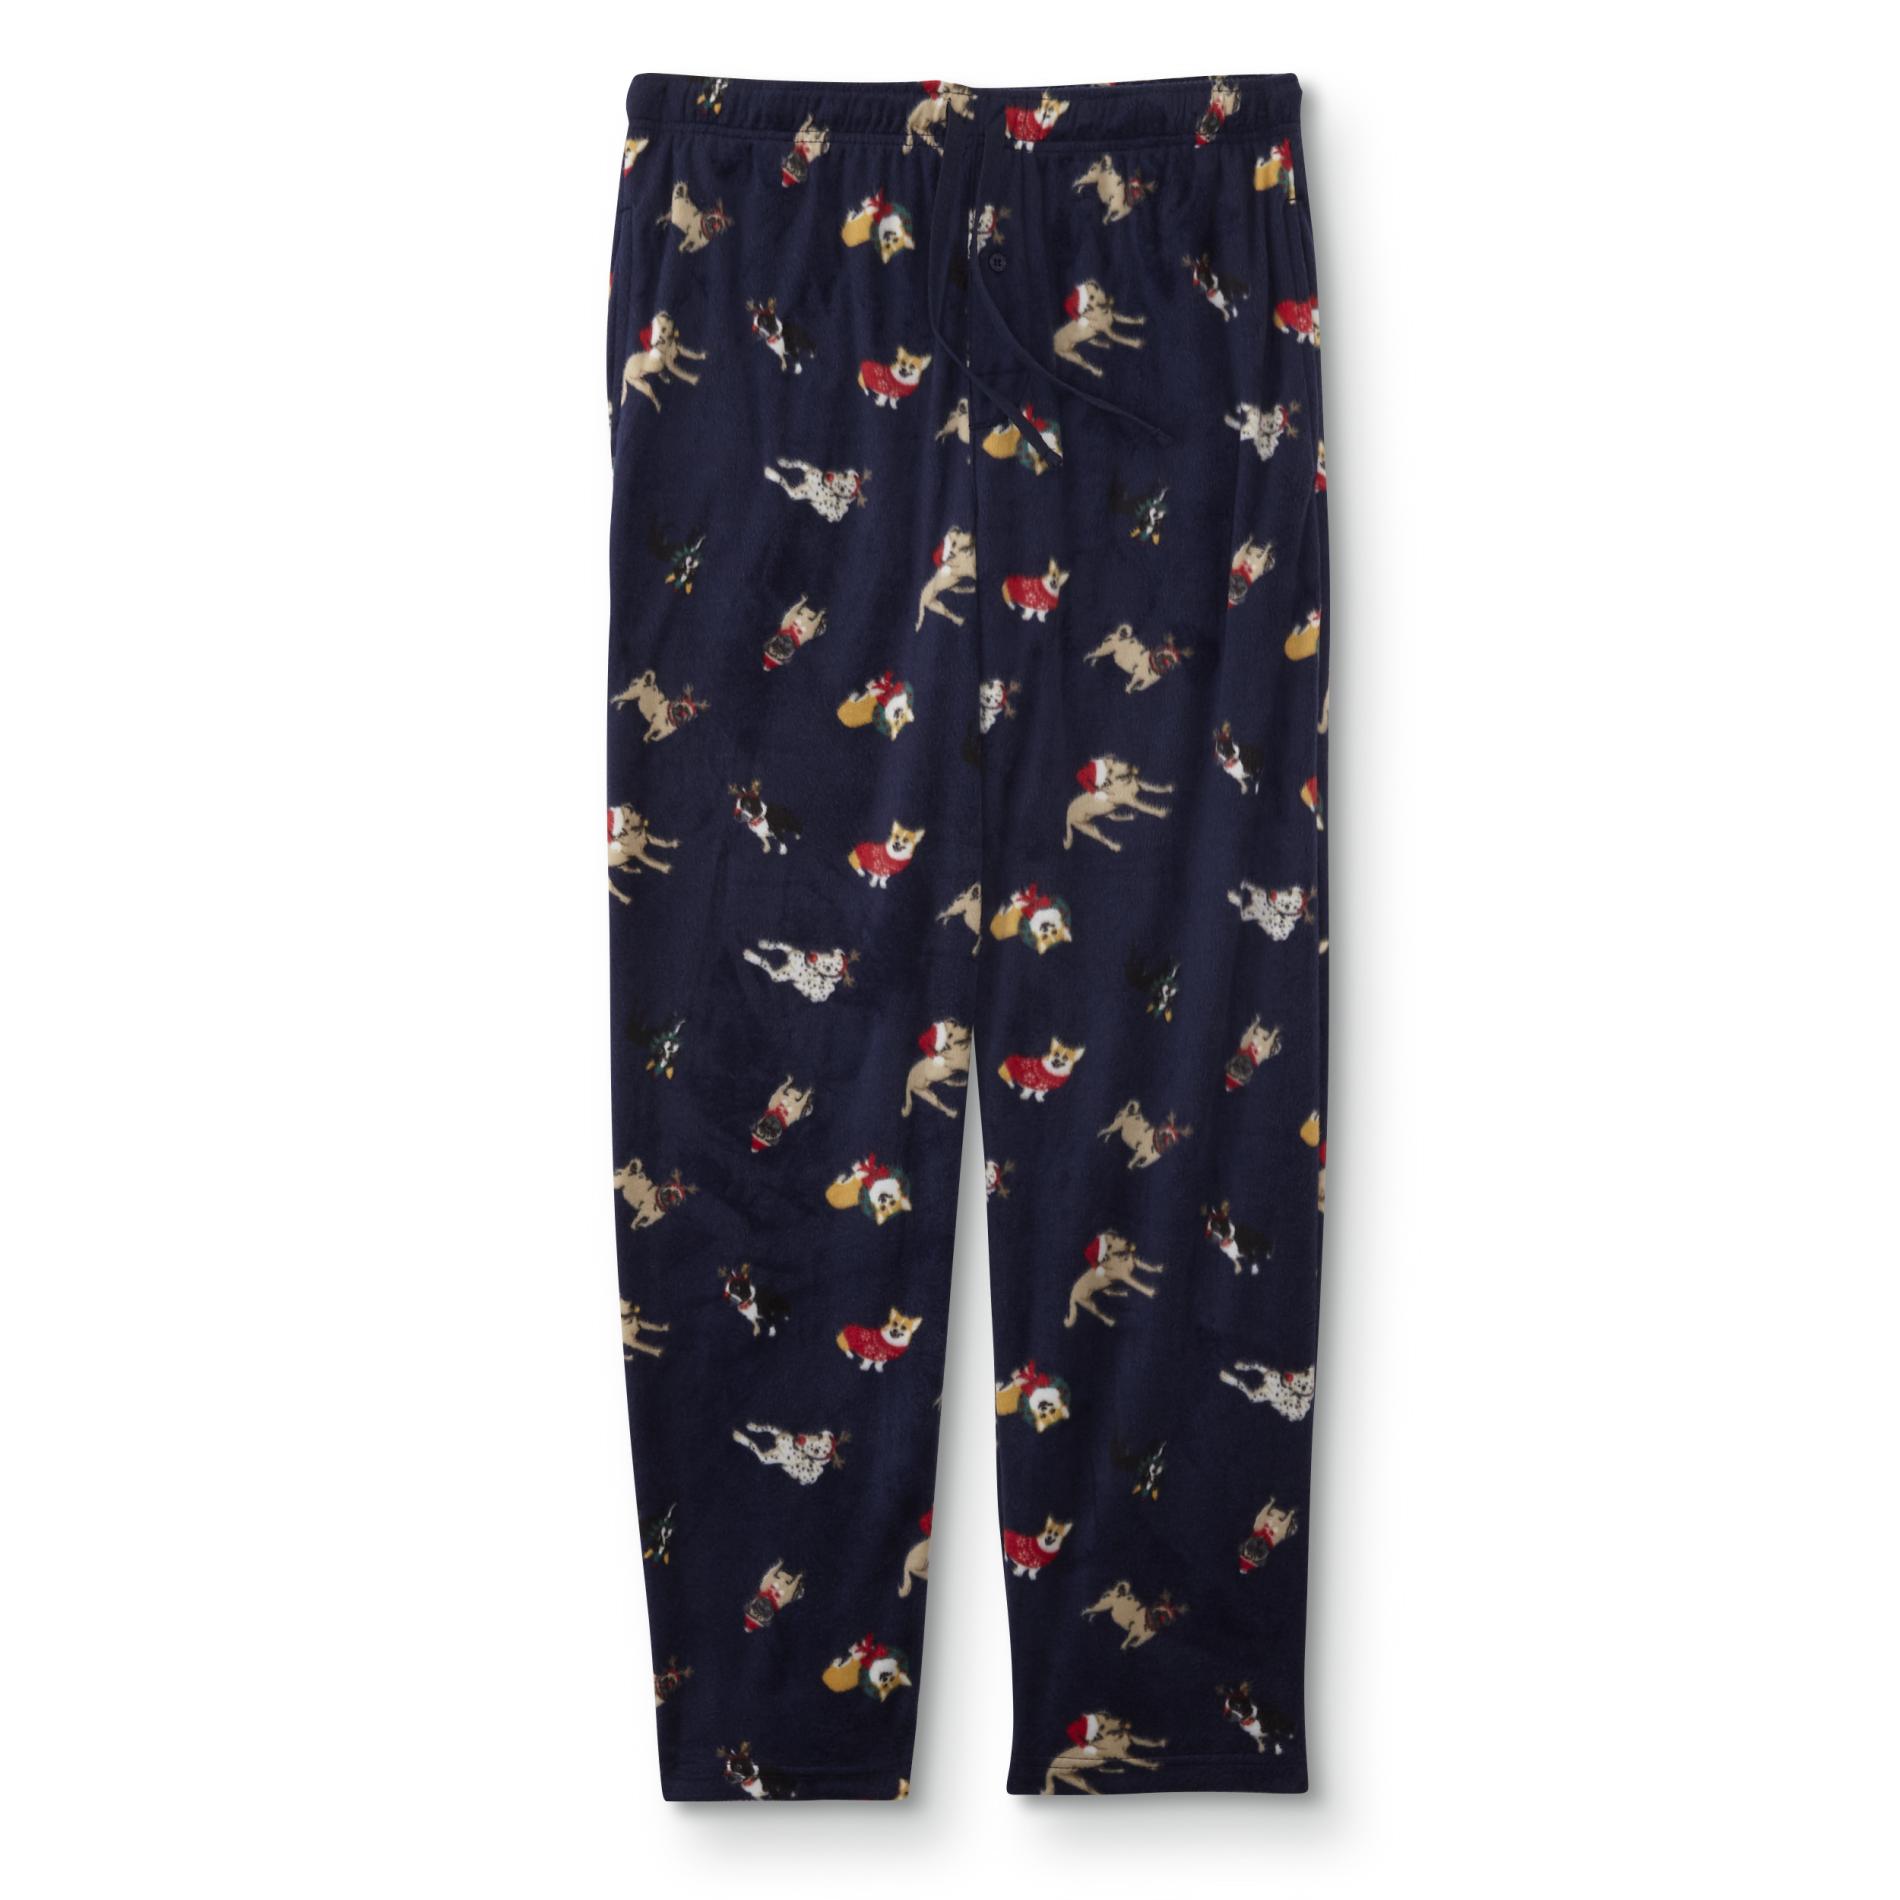 Joe Boxer Men's Fleece Pajama Pants - Dogs